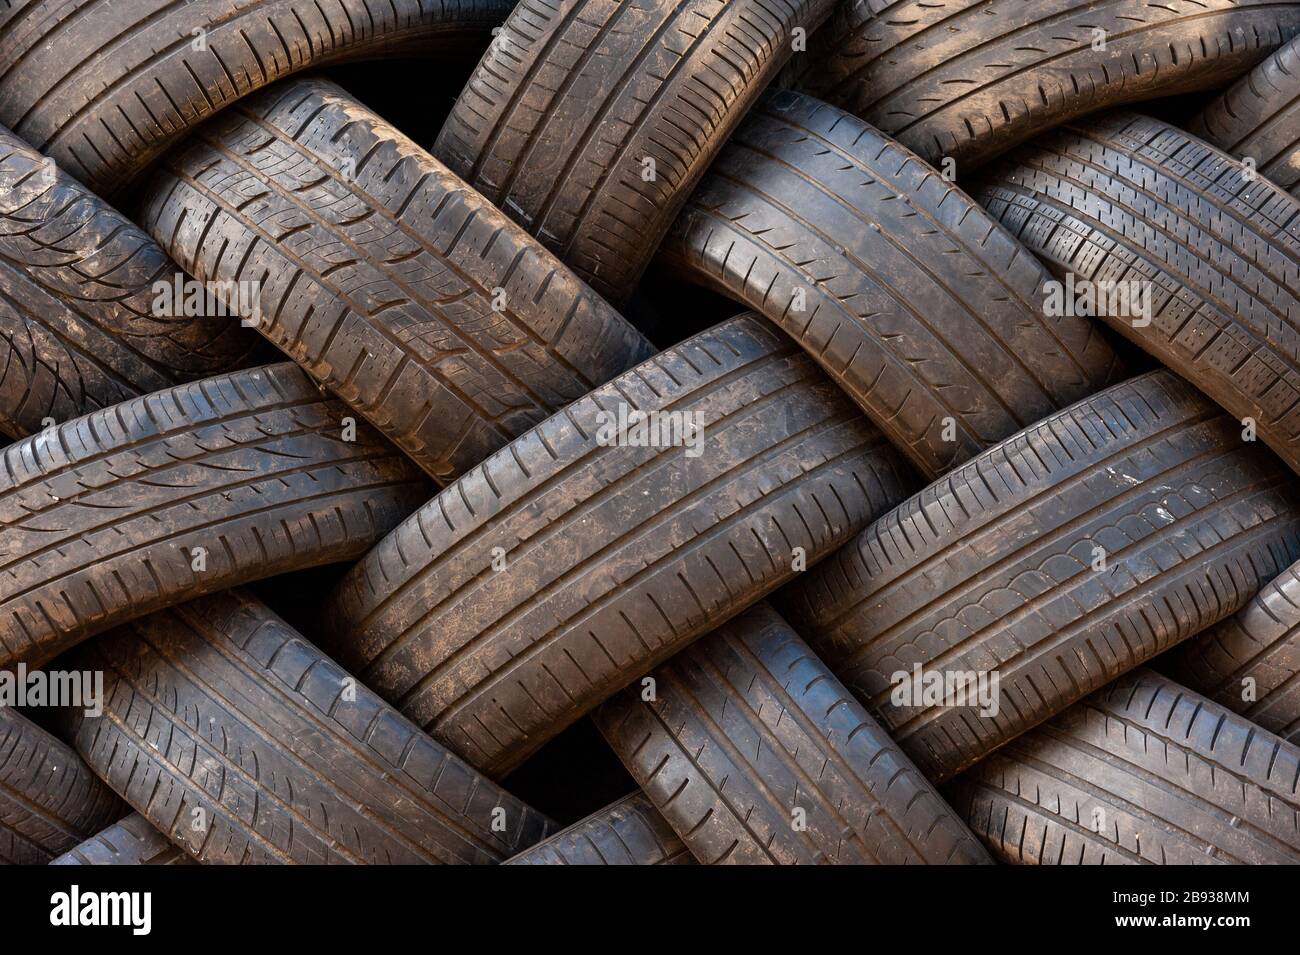 Car tyres at garage, UK Stock Photo